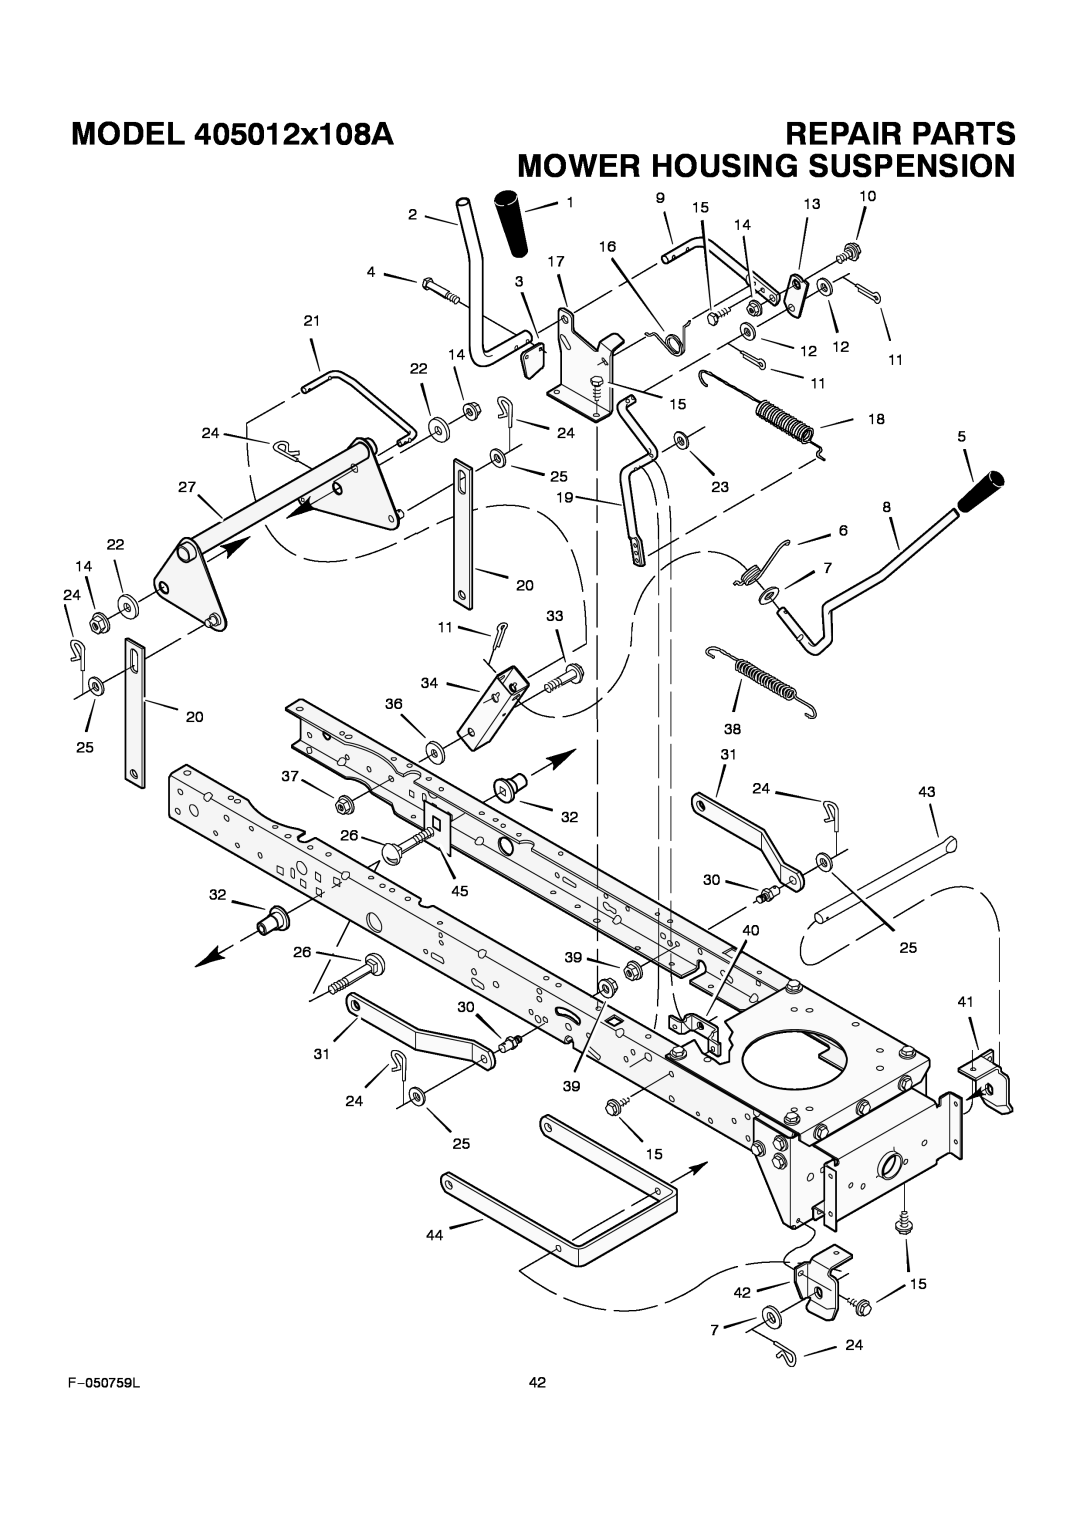 Rover owner manual Mower Housing Suspension, MODEL 405012x108A, Repair Parts 